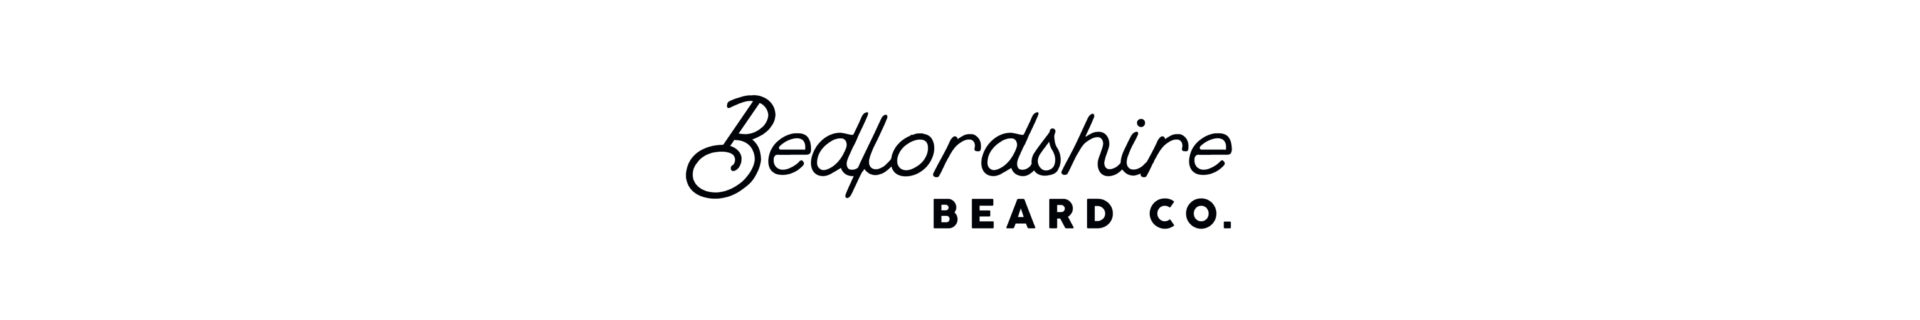 Bedfordshire Beard Co 3